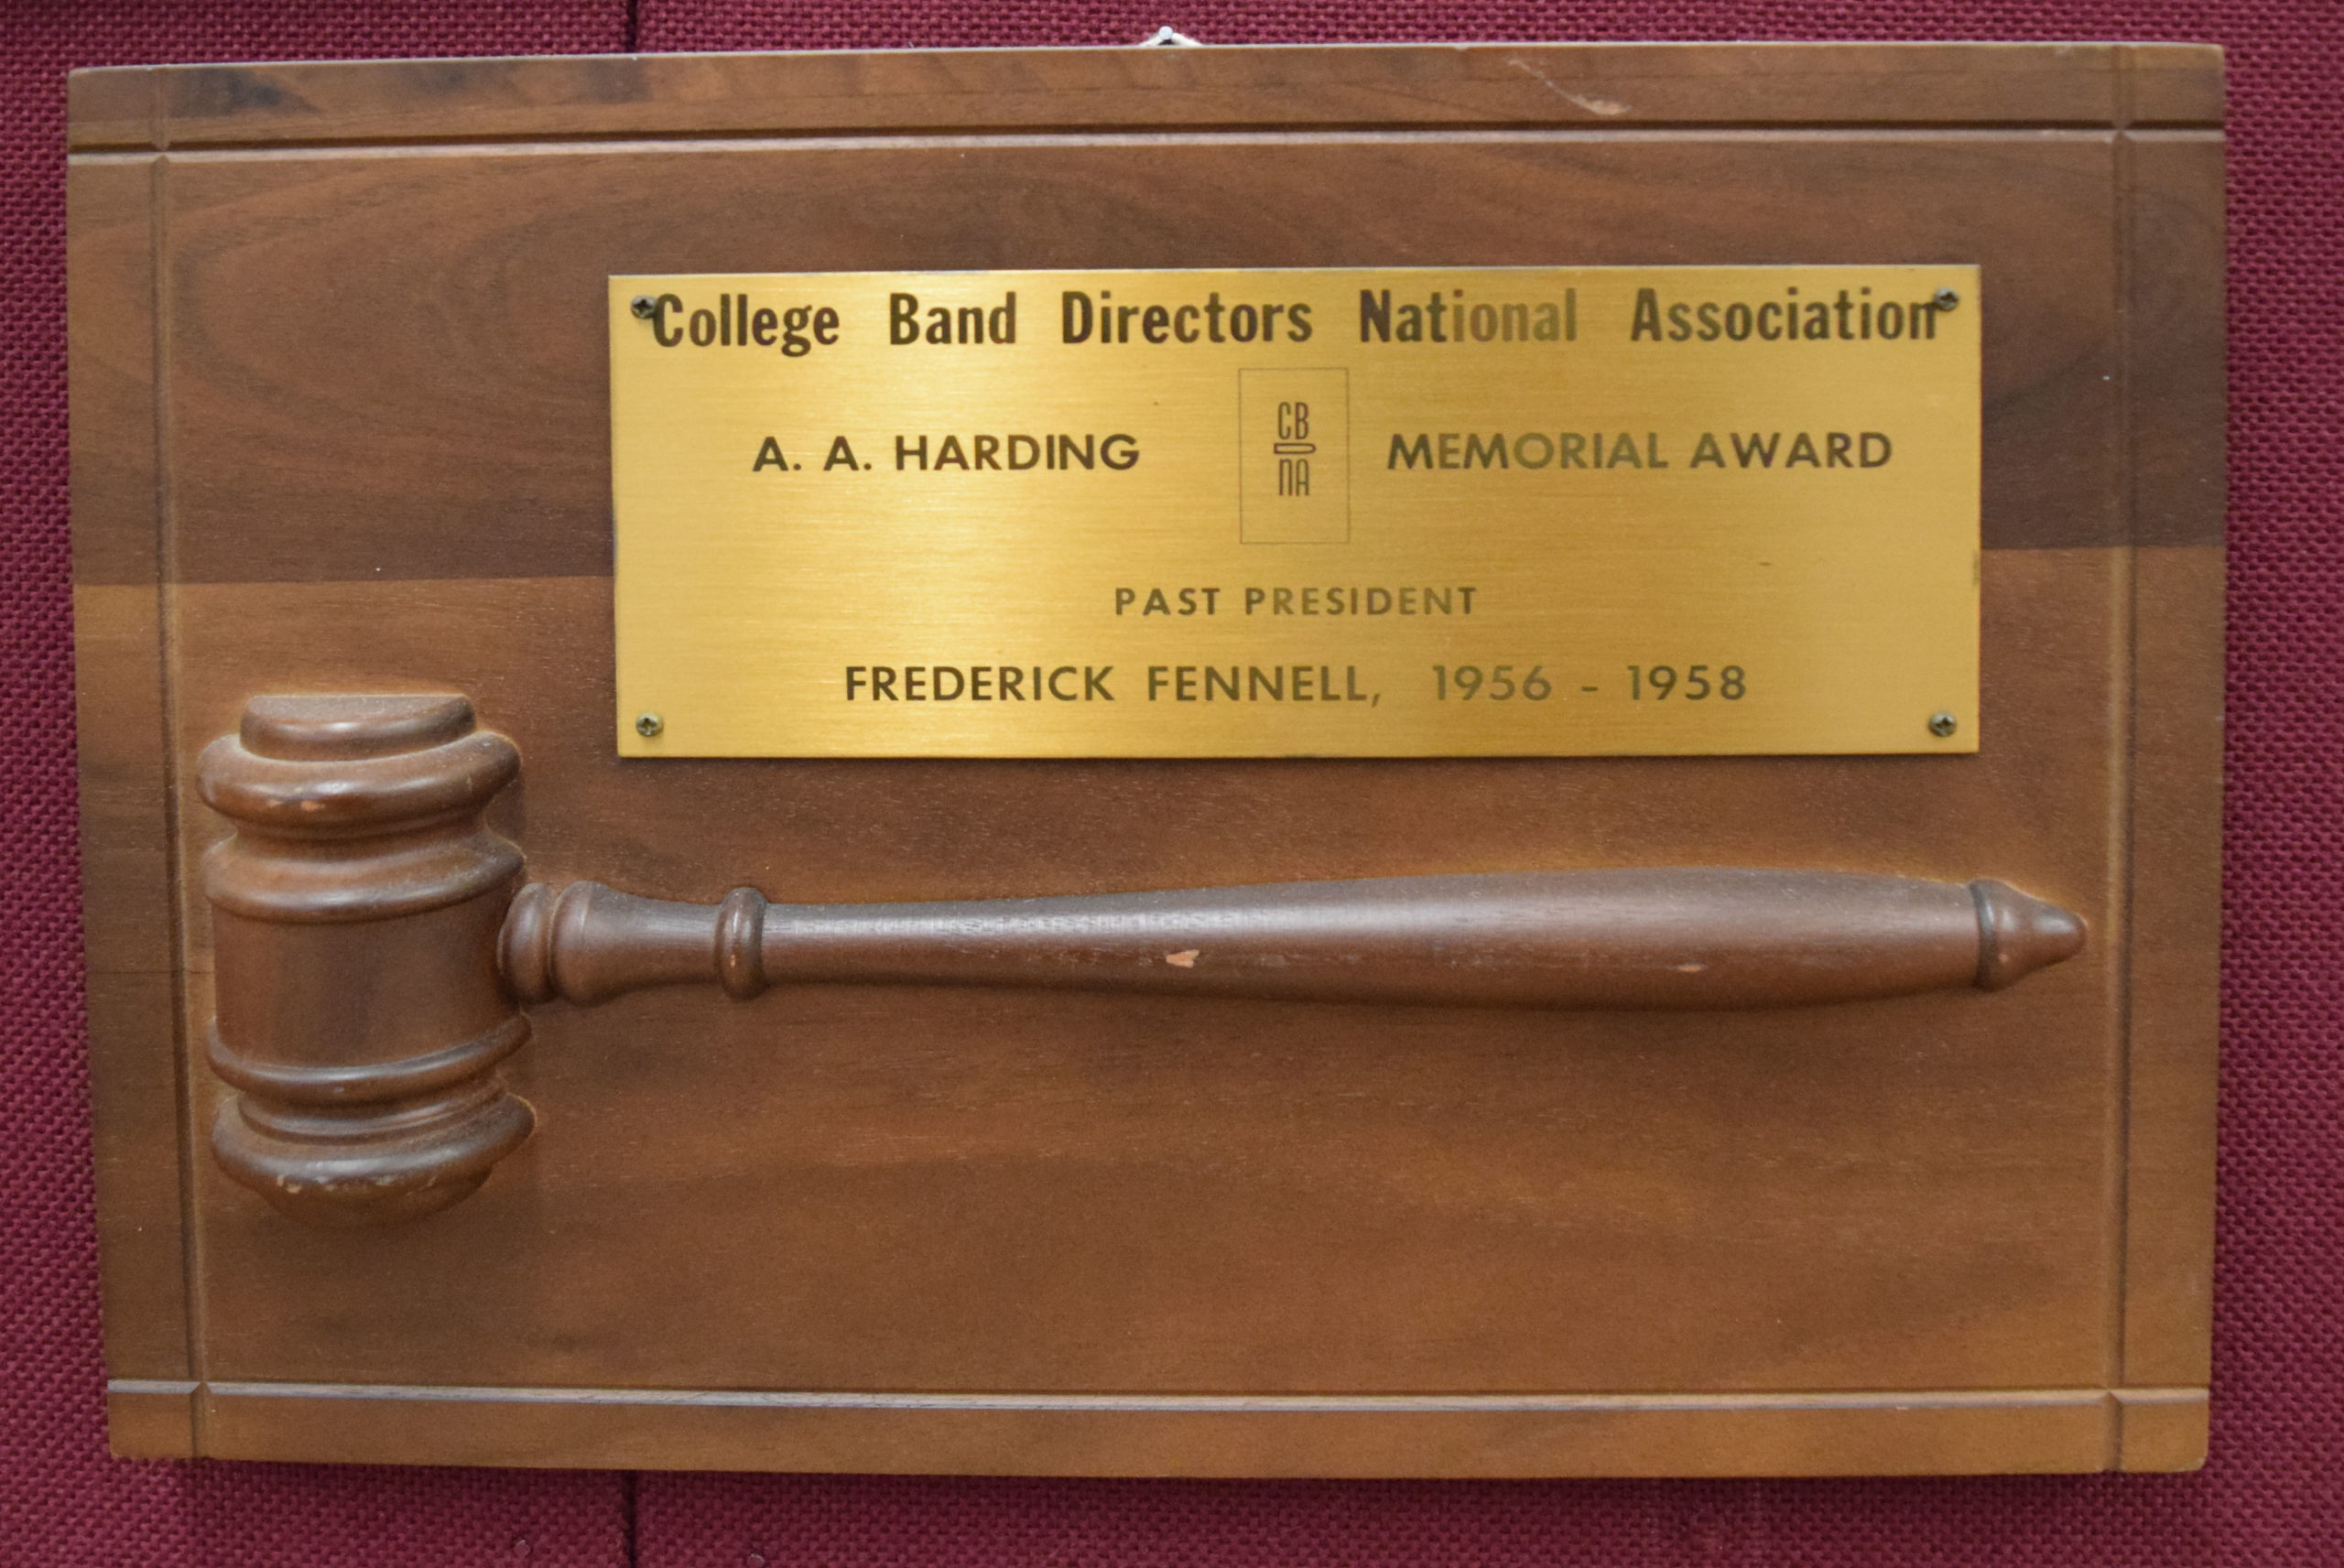 CBDNA Harding Memorial Award (1958)